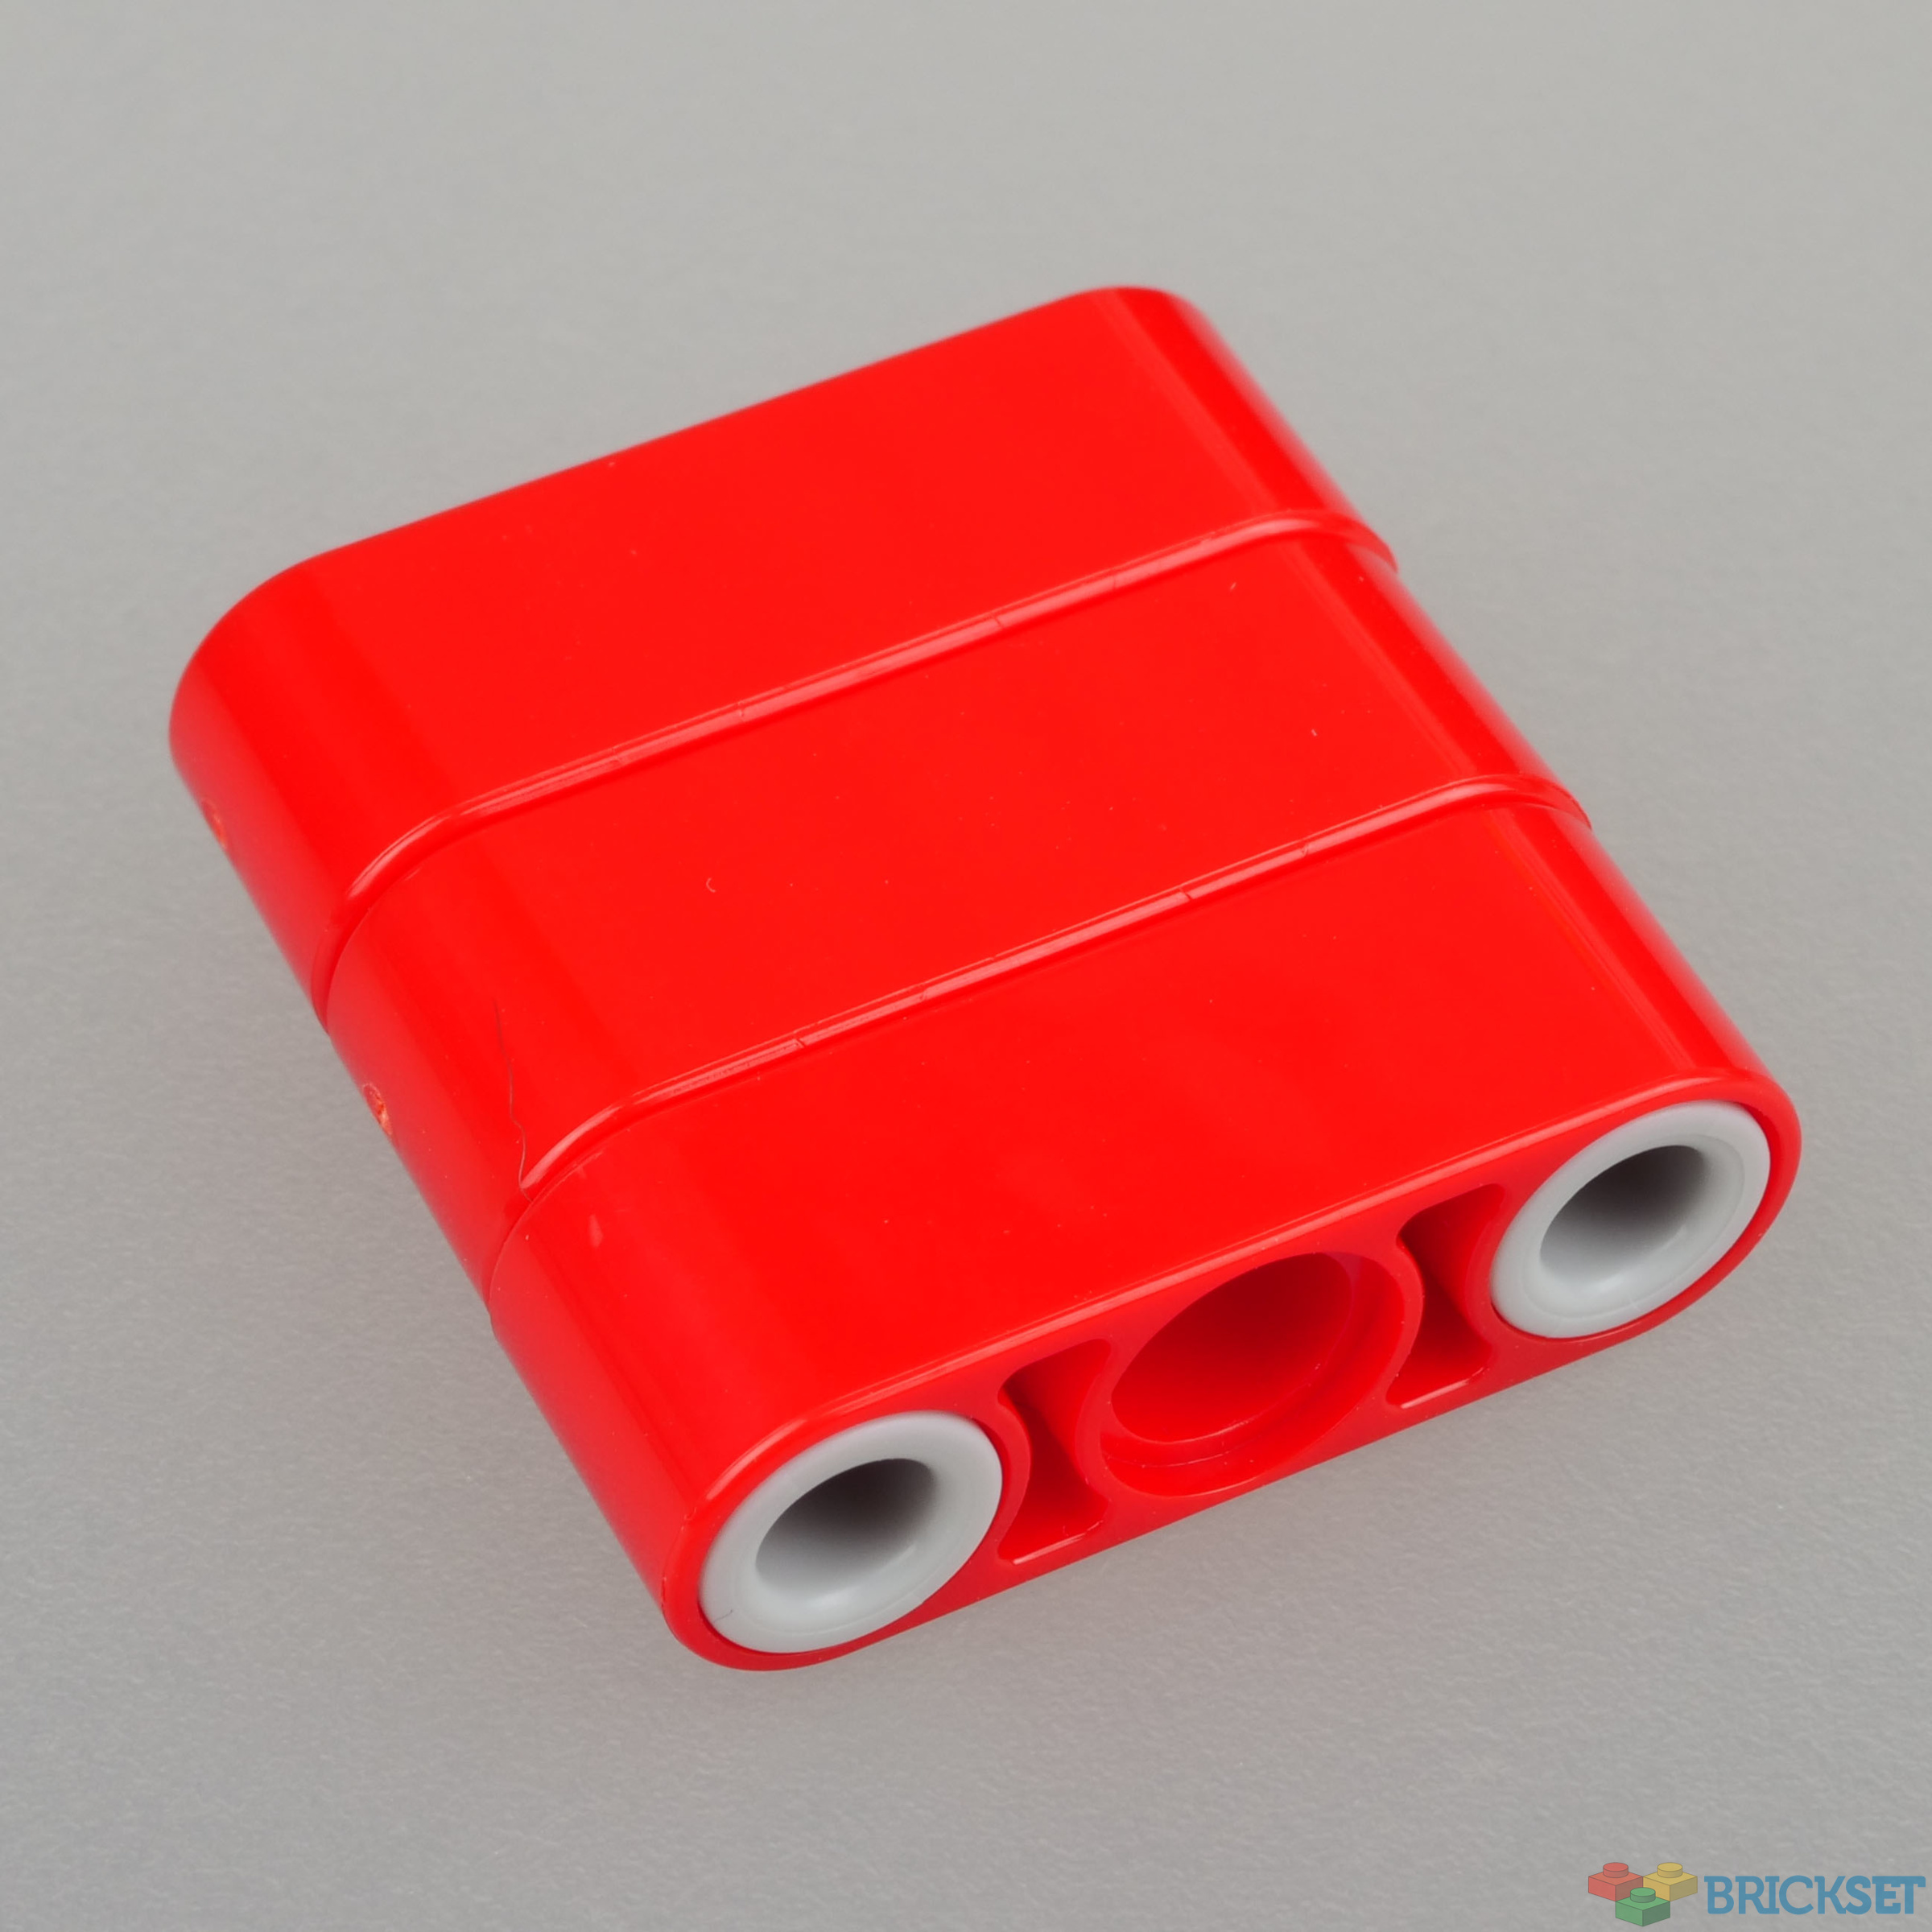 New - 3L Pin w/ Bushing x 50 Orange LEGO Technic EV3, 32054, Connector